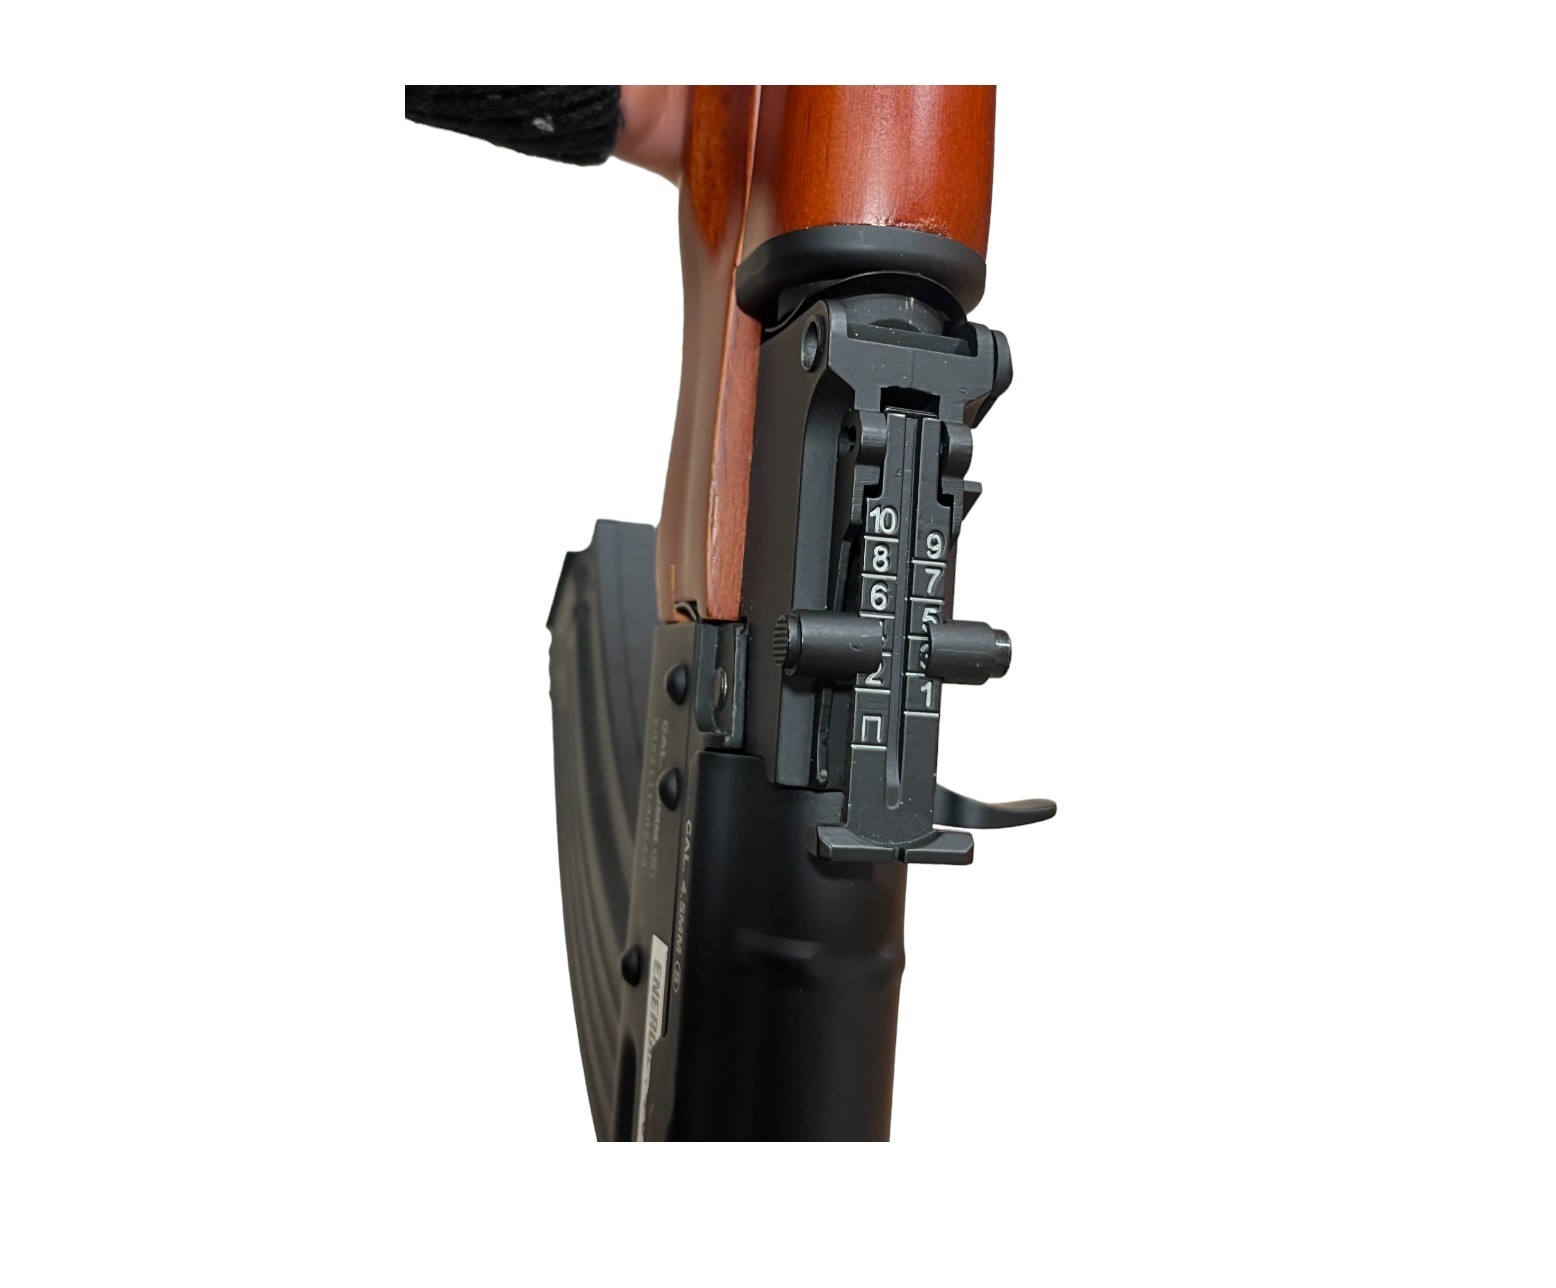 Kalashnikov AK74 Air Rifle (Cybergun – Metal/Wood – 4.5mm/.177 – Co2 Powered – 128302)